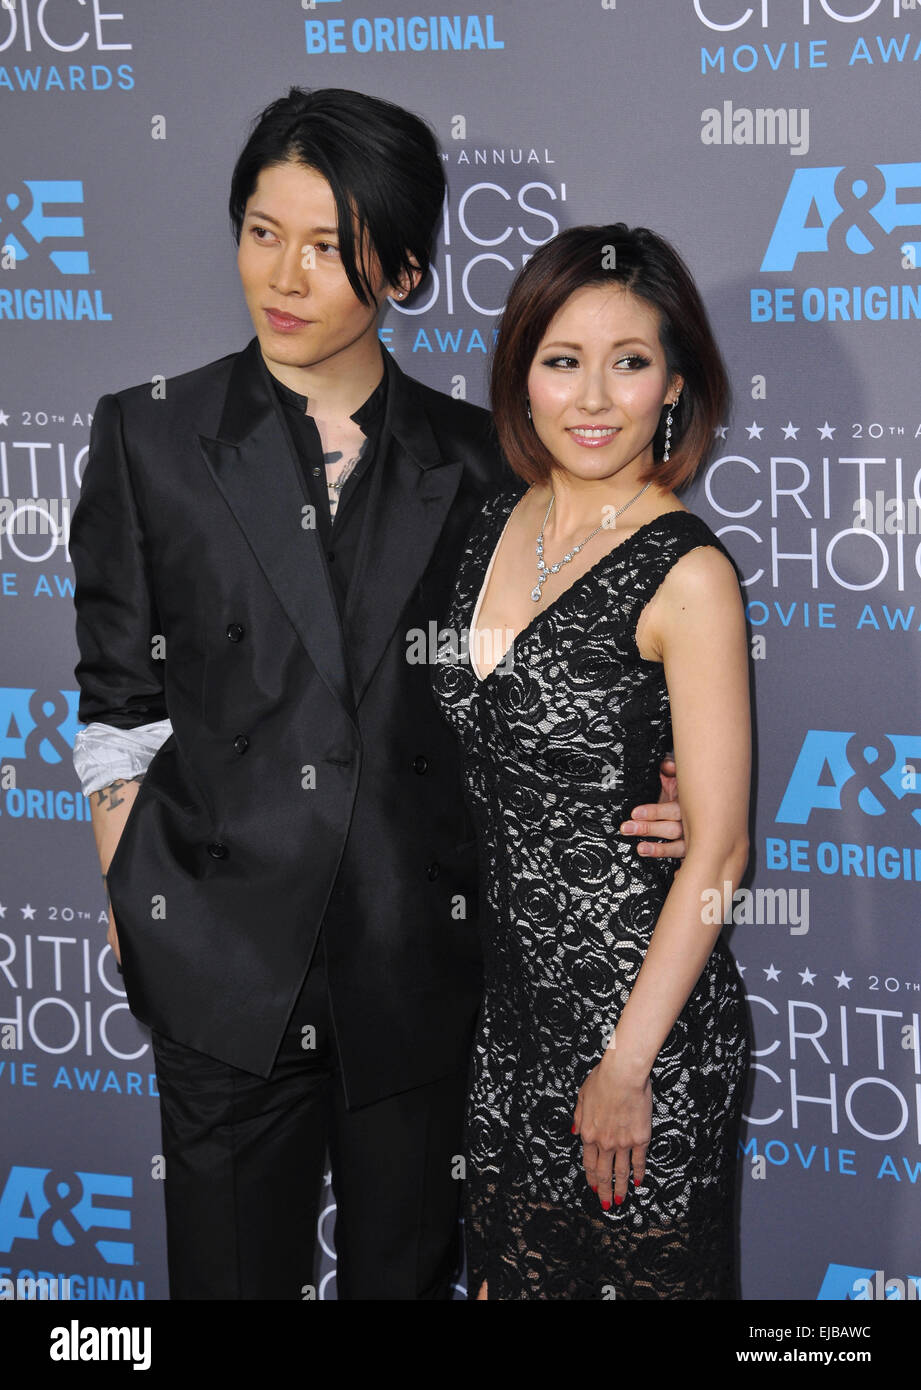 LOS ANGELES, CA - JANUARY 15, 2015: Takamasa Ishihara (Miyavi) & wife Melody Miyuki Ishikawa at the 20th Annual Critics' Choice Movie Awards at the Hollywood Palladium. Stock Photo